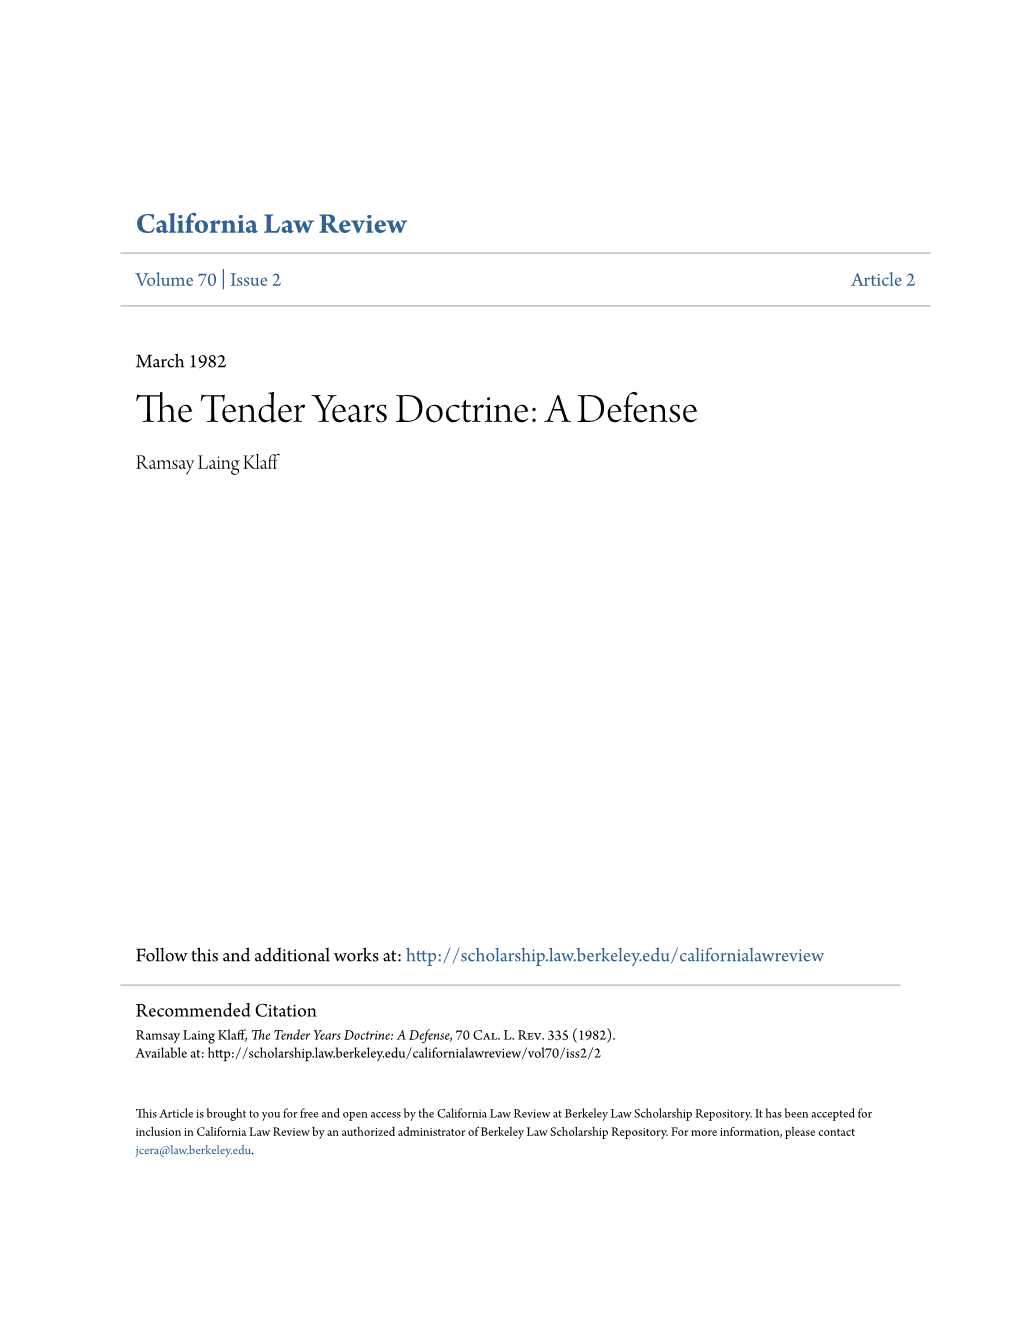 The Tender Years Doctrine: a Defense, 70 Cal